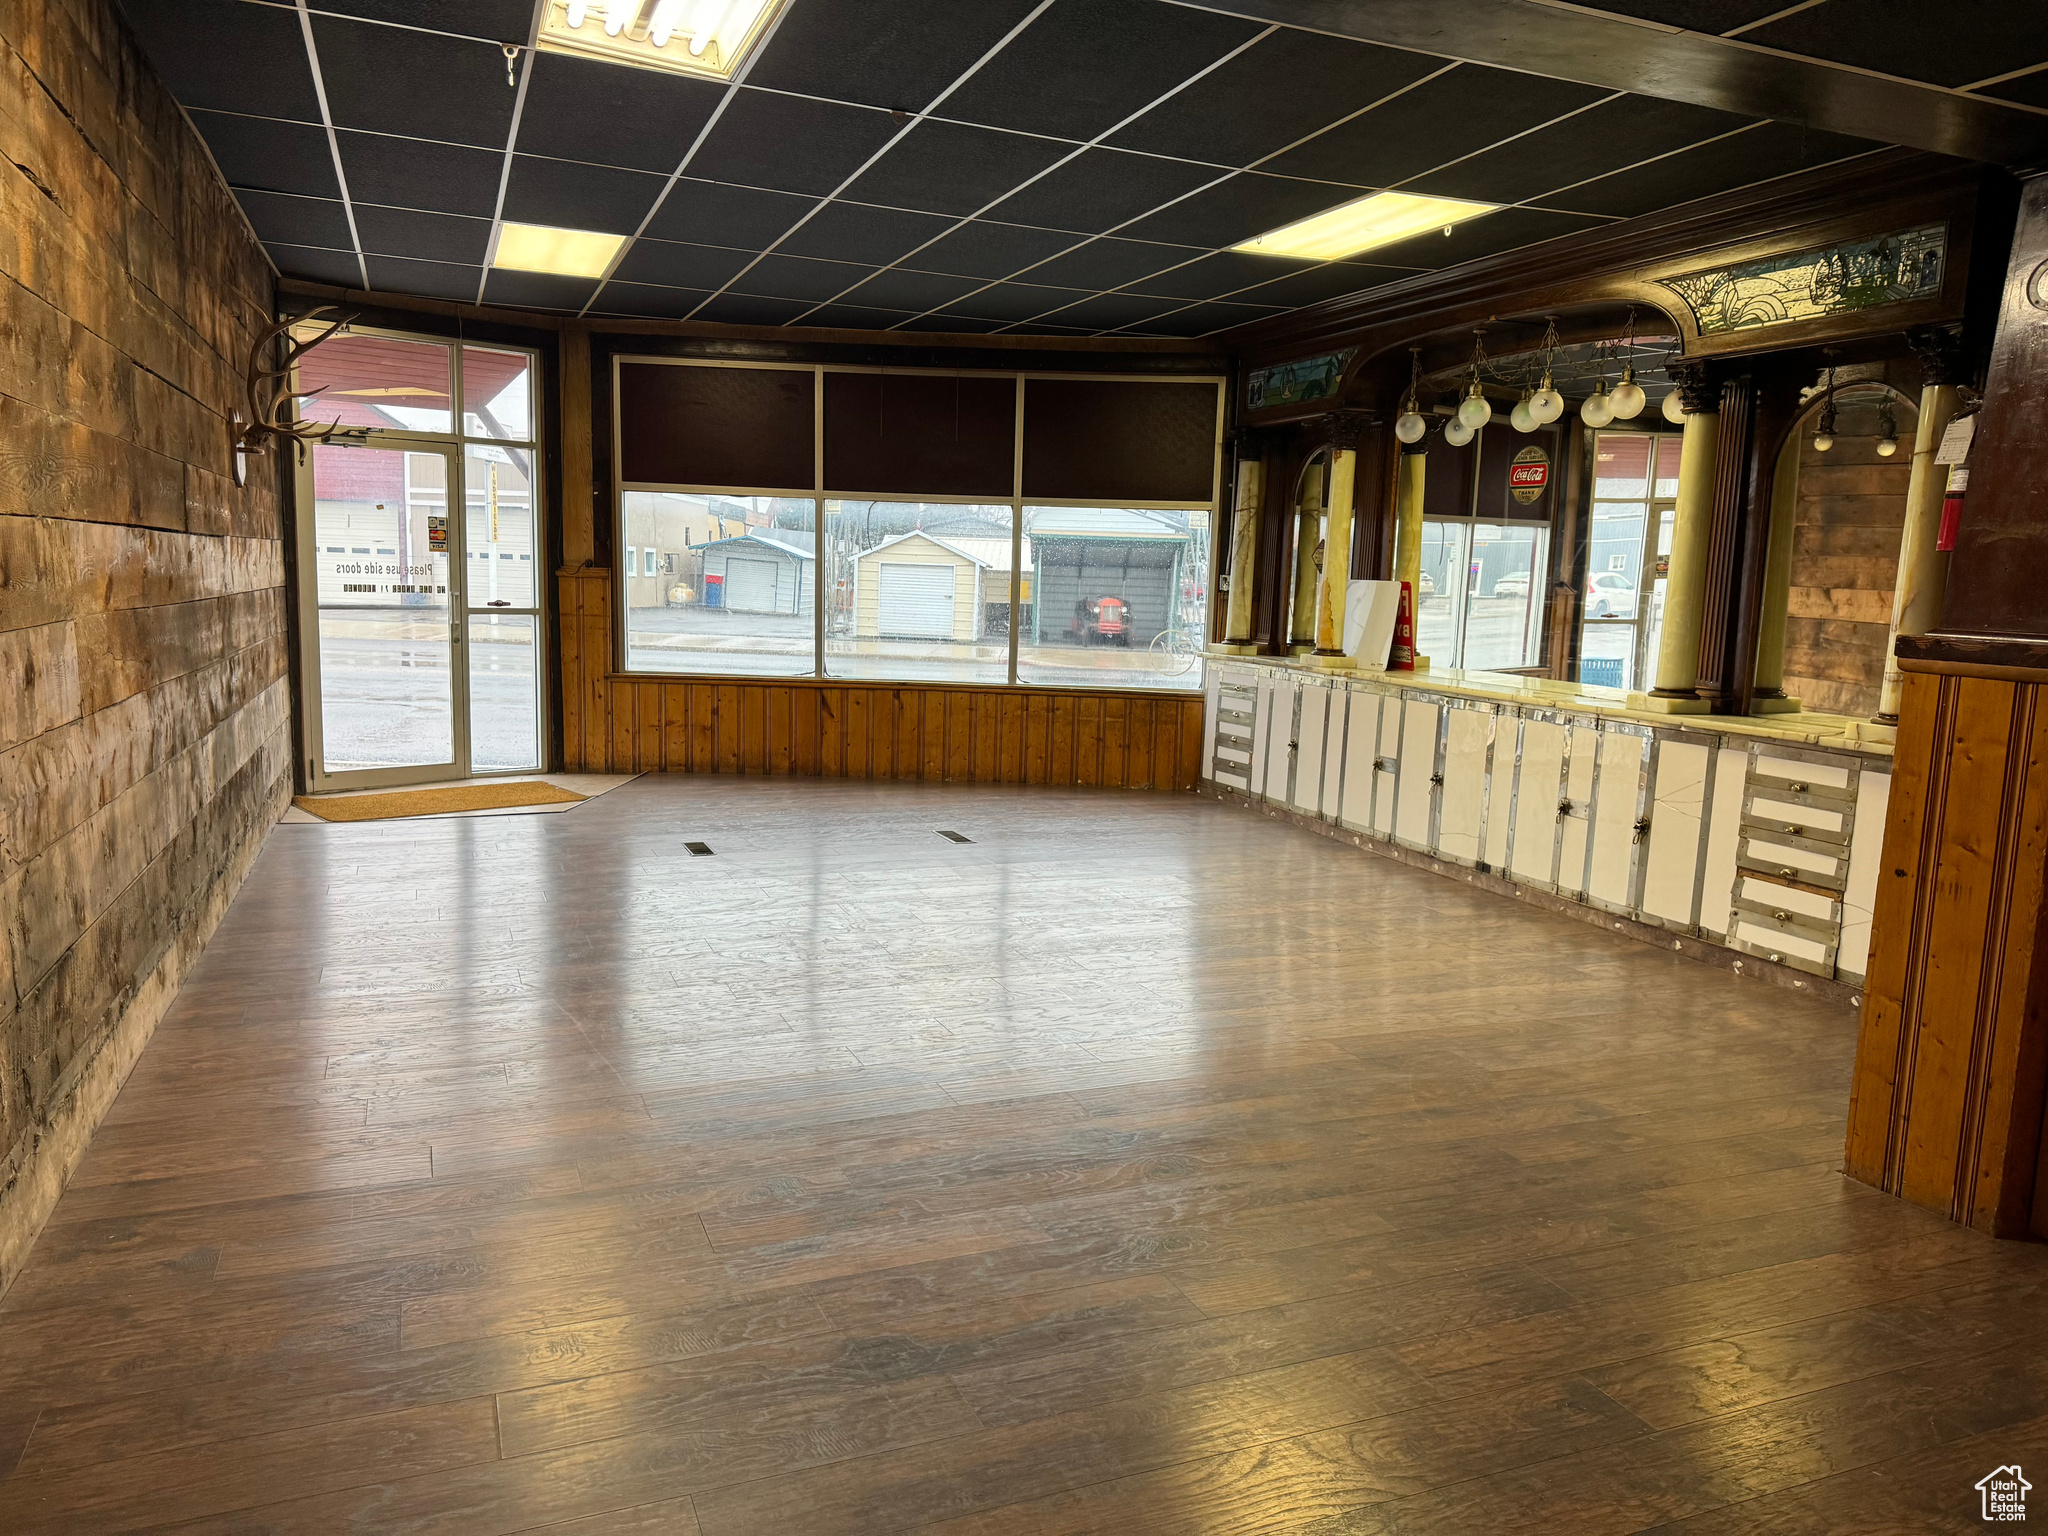 Dance floor featuring dark hardwood / wood-style floors